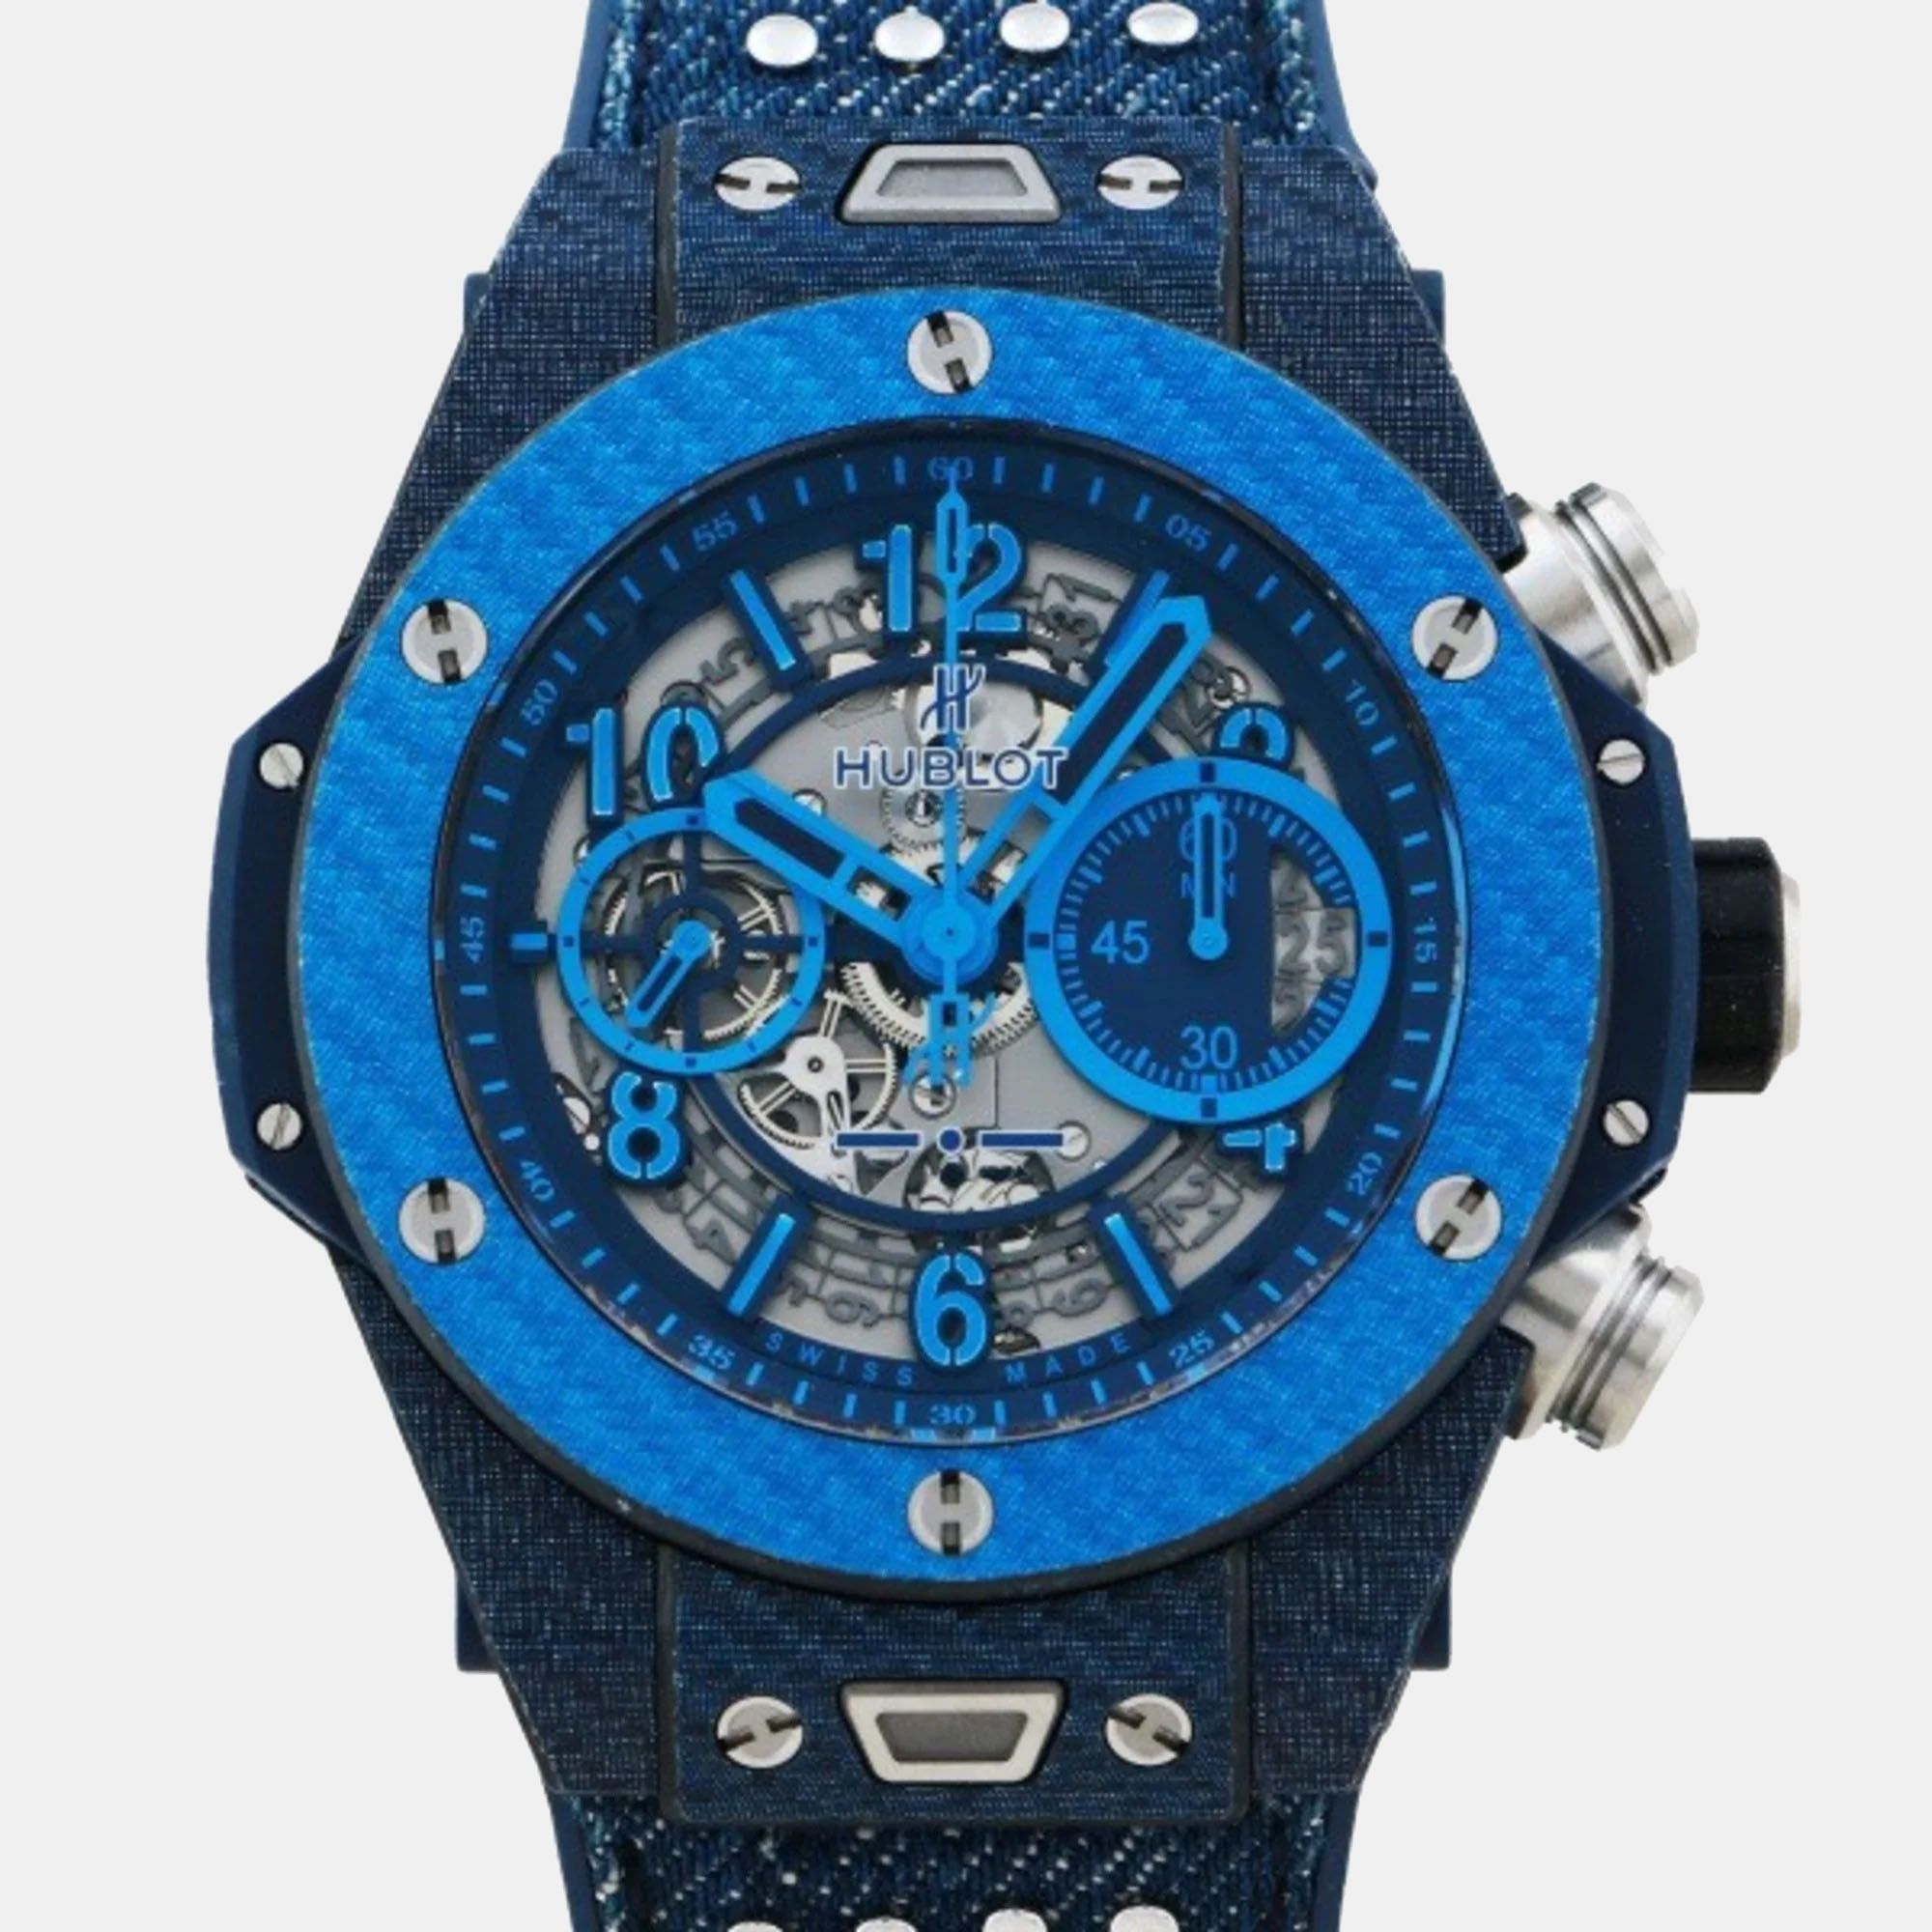 Hublot grey carbon big bang 411.yl.5190.nr.iti15 automatic men's wristwatch 45 mm